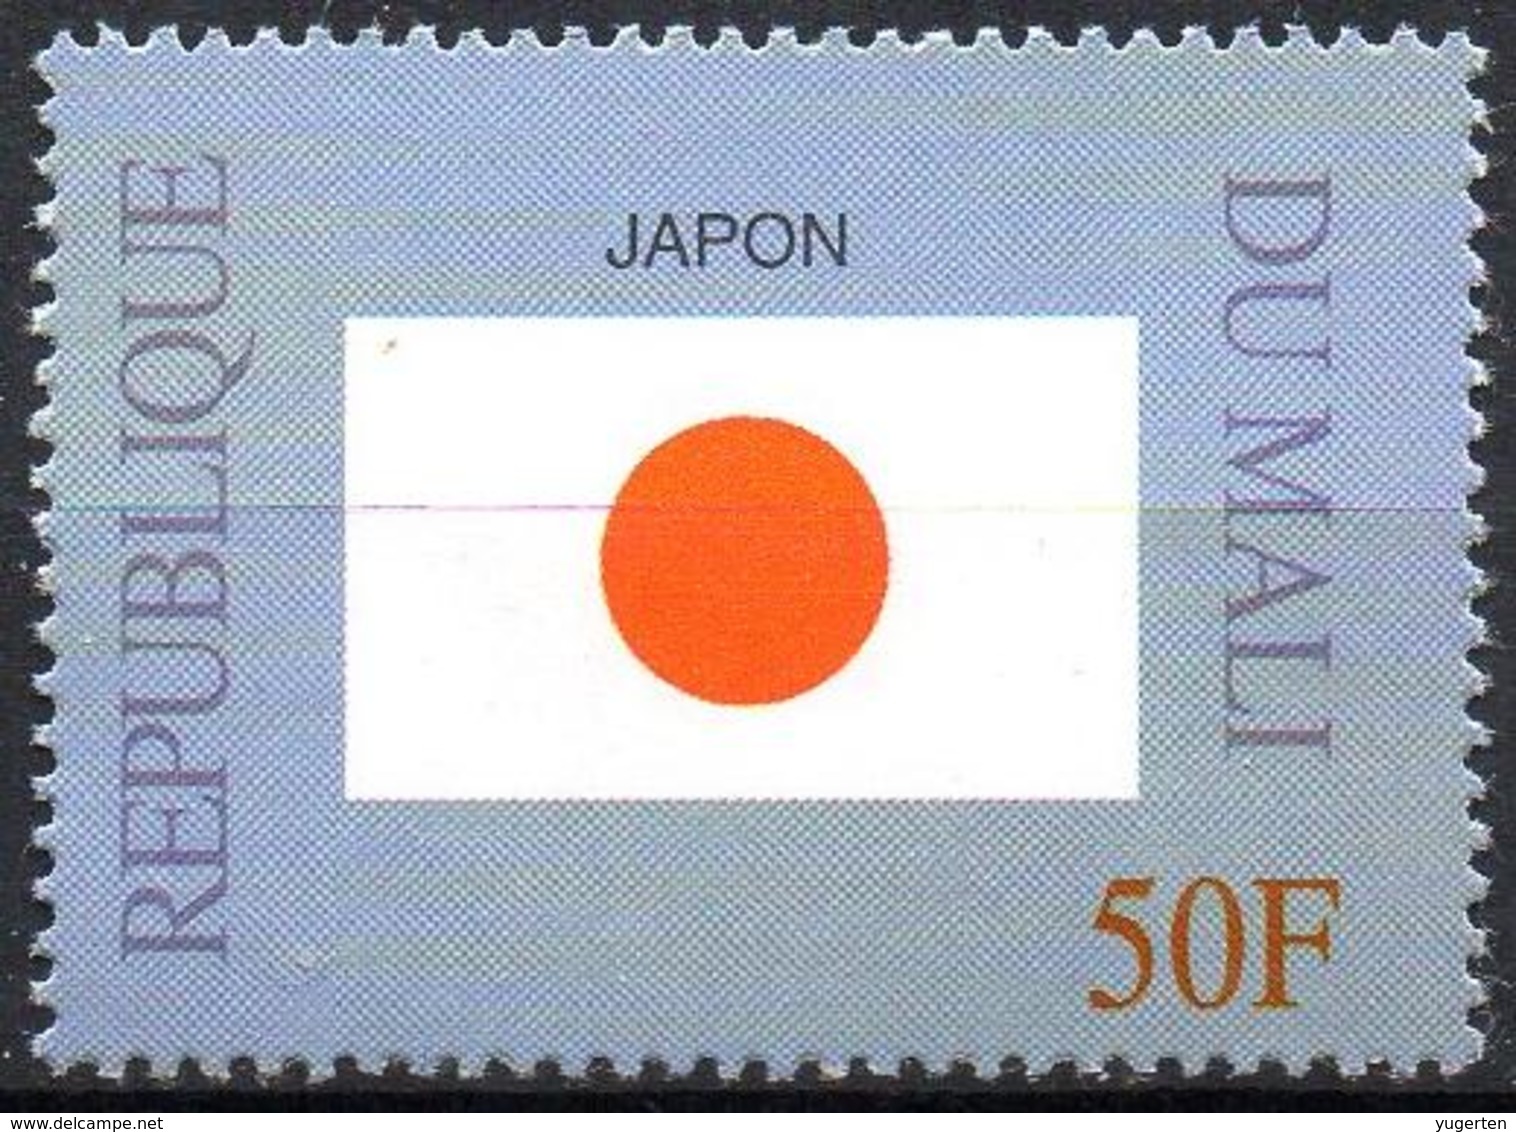 MALI 1999 - 1v - MNH** - Flag Of Japan Japon Flags Drapeaux Fahnen Bandiere Banderas флаги - Francobolli